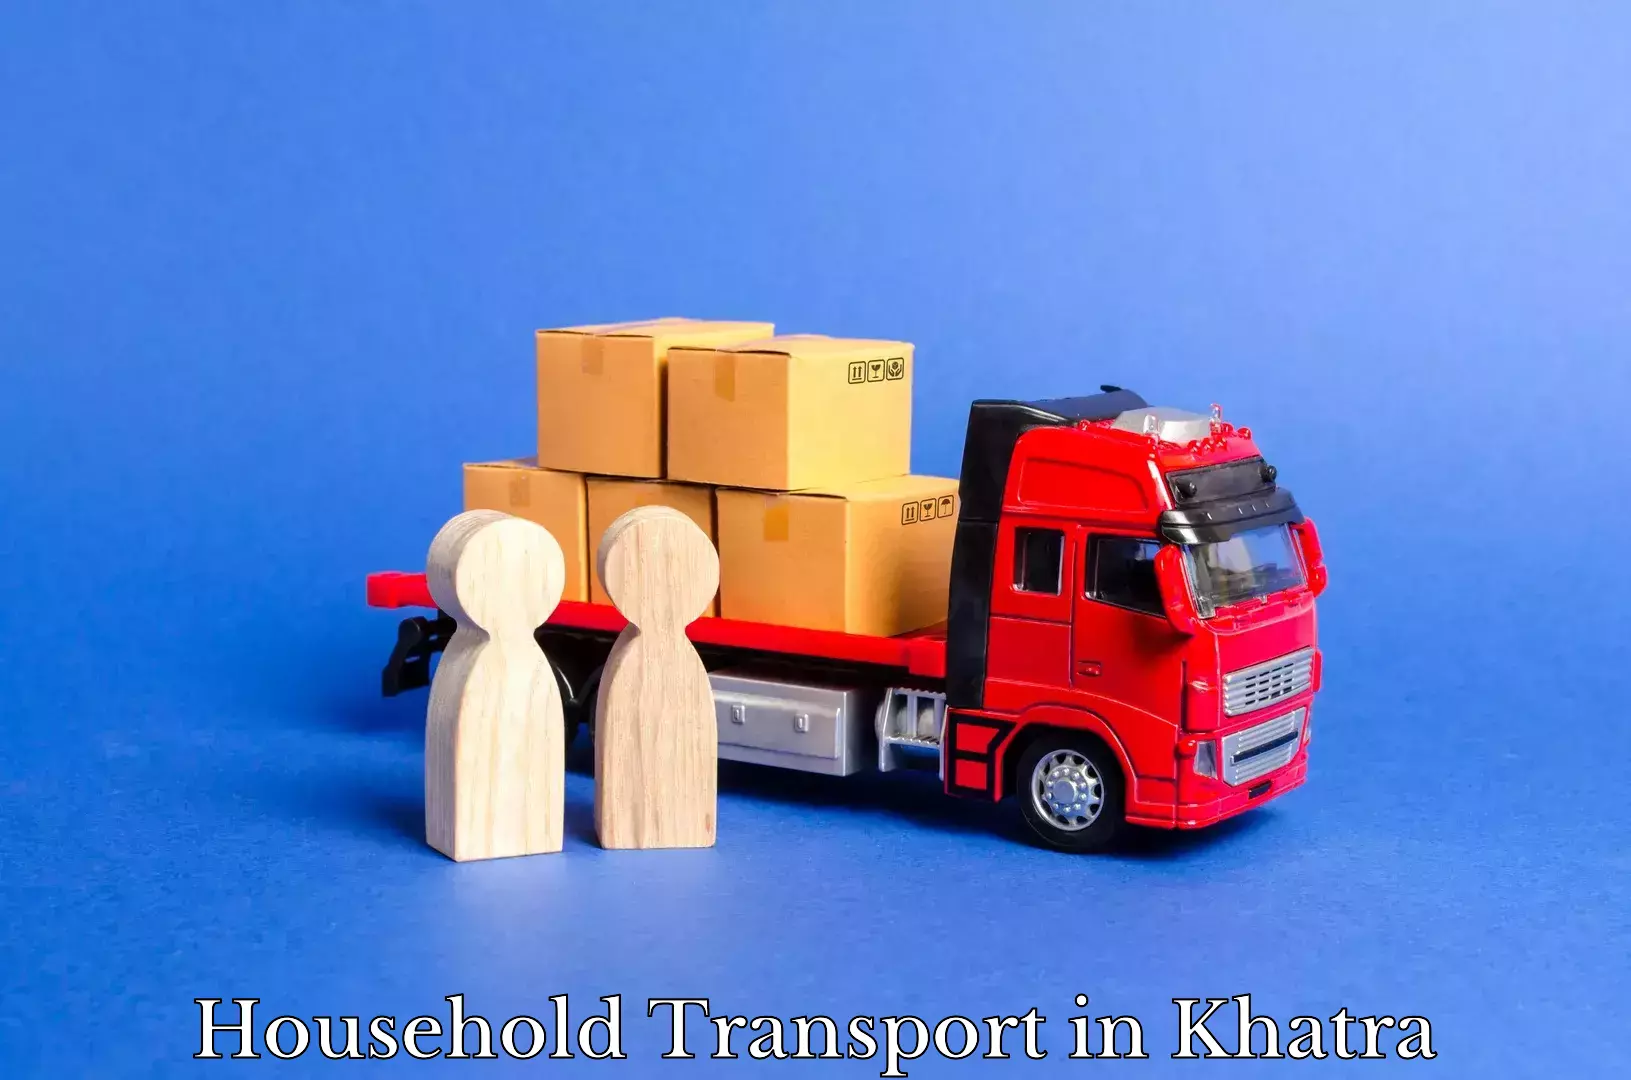 Household goods transport service in Khatra